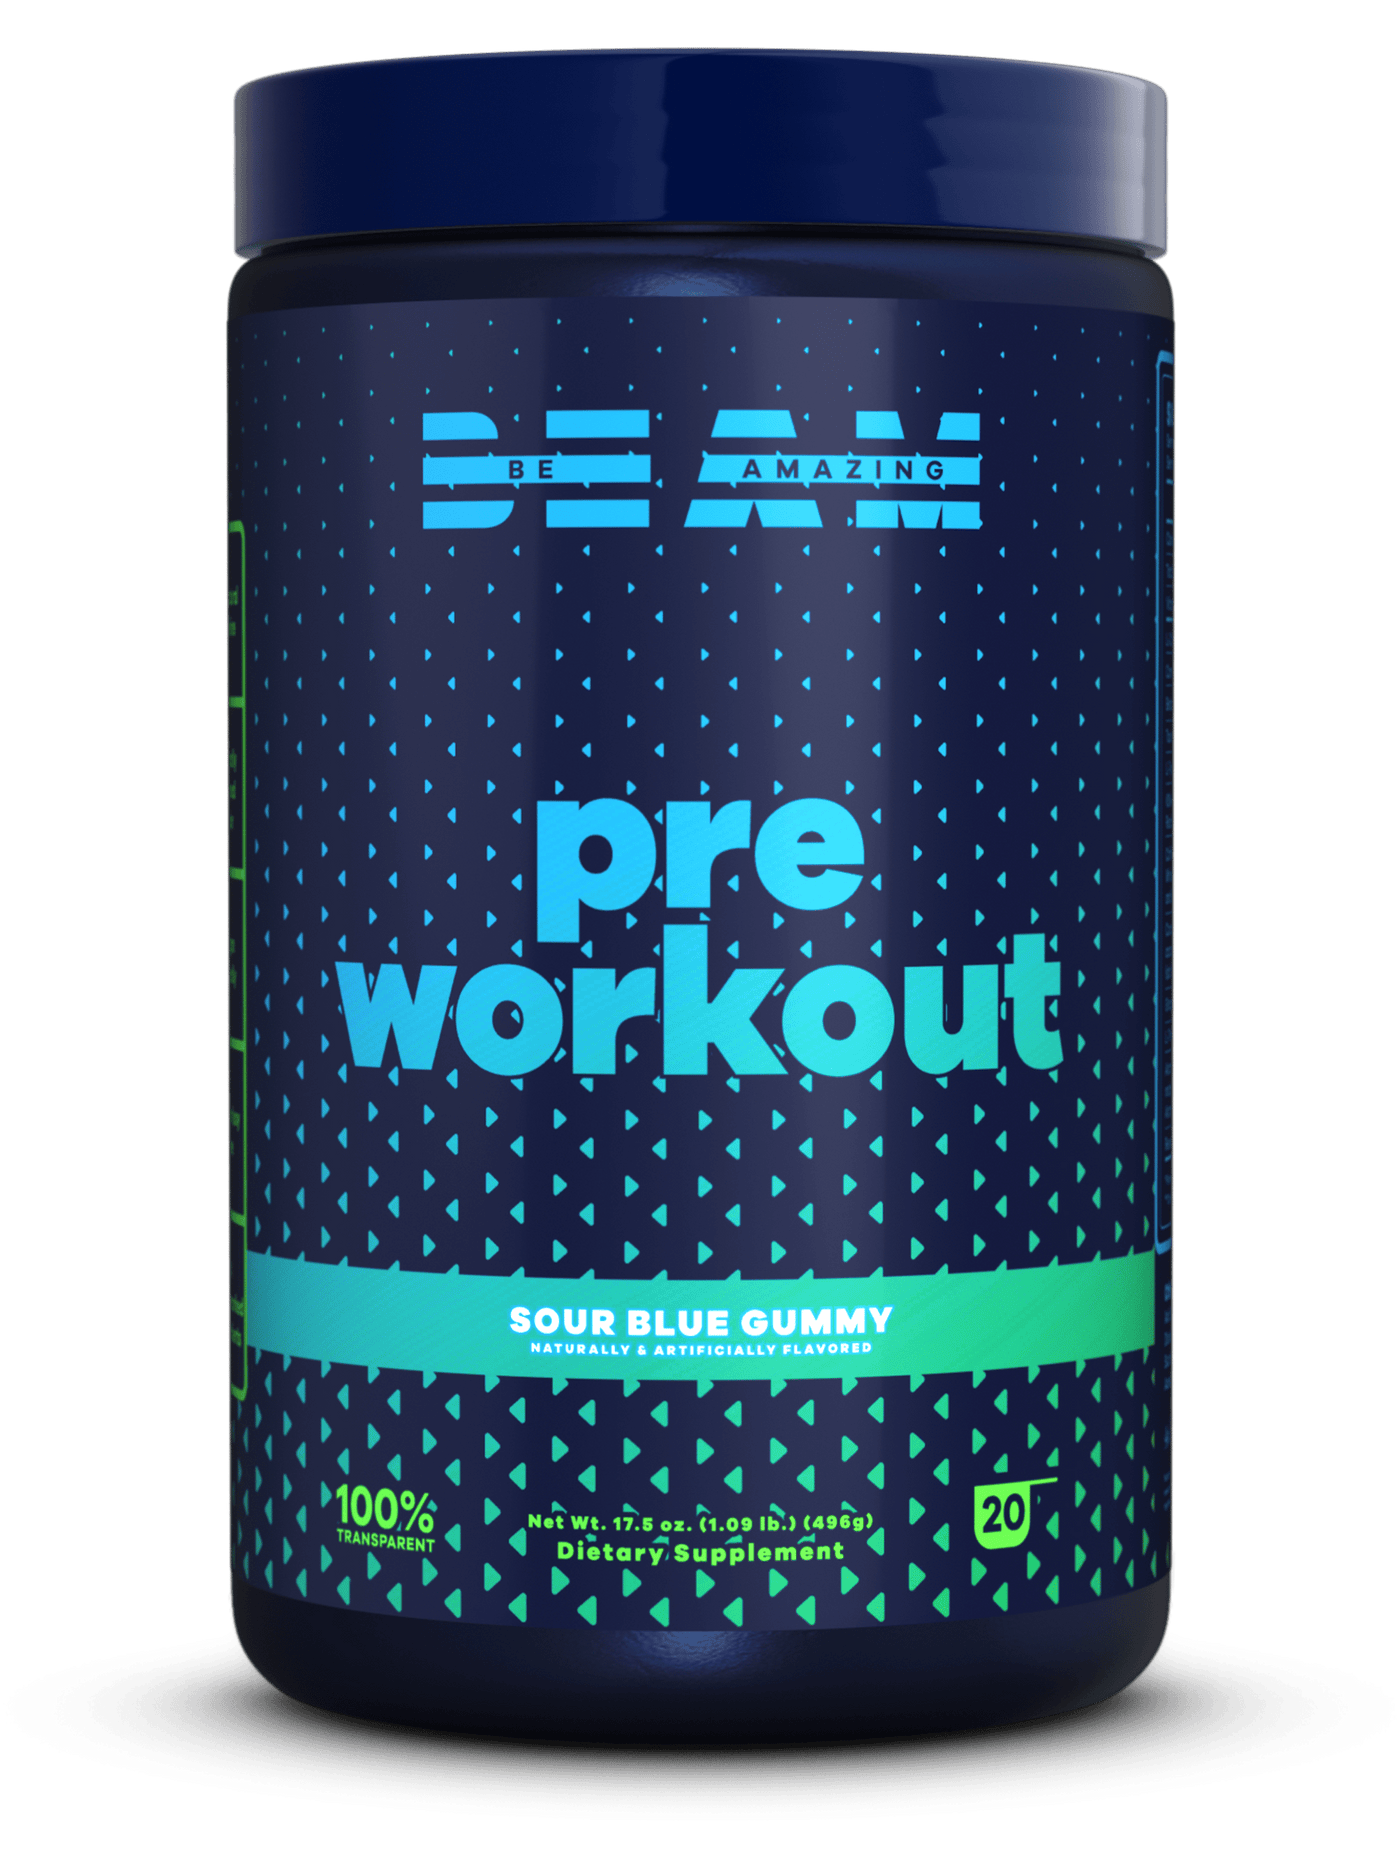 BEAM: Be Amazing Premium pre workout Supplement l